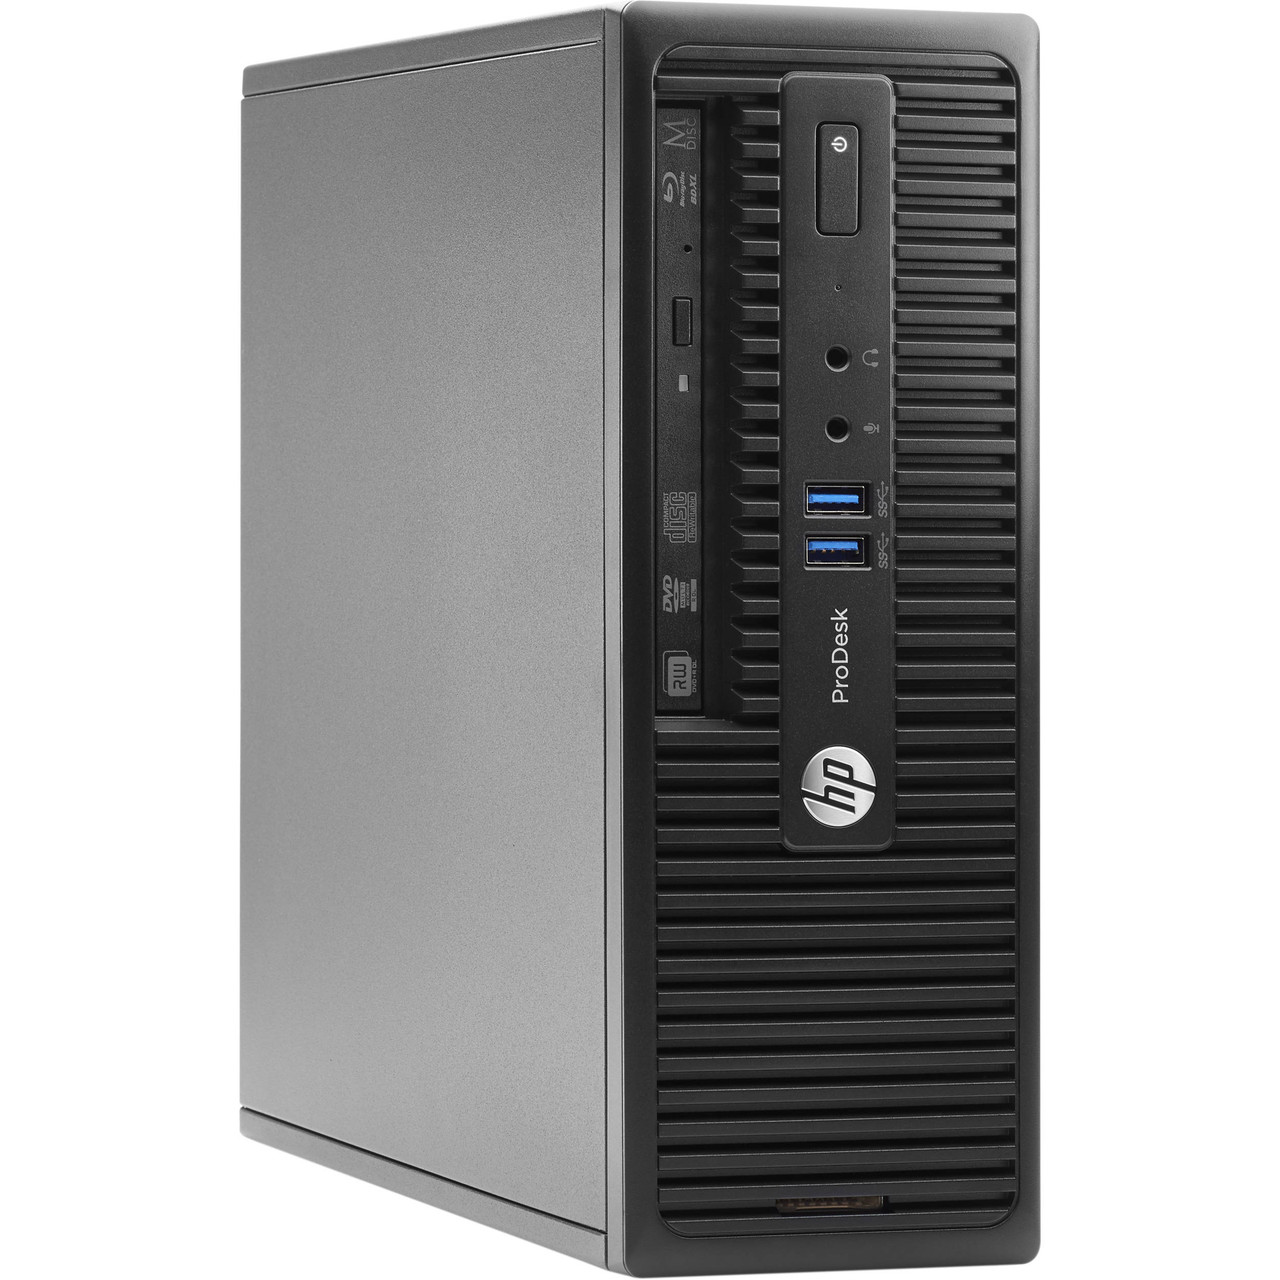 HP Prodesk 400 G2 Desktop Intel Core i3 3.20 GHz 8 GB 500 GB Windows 10 Pro | Refurbished